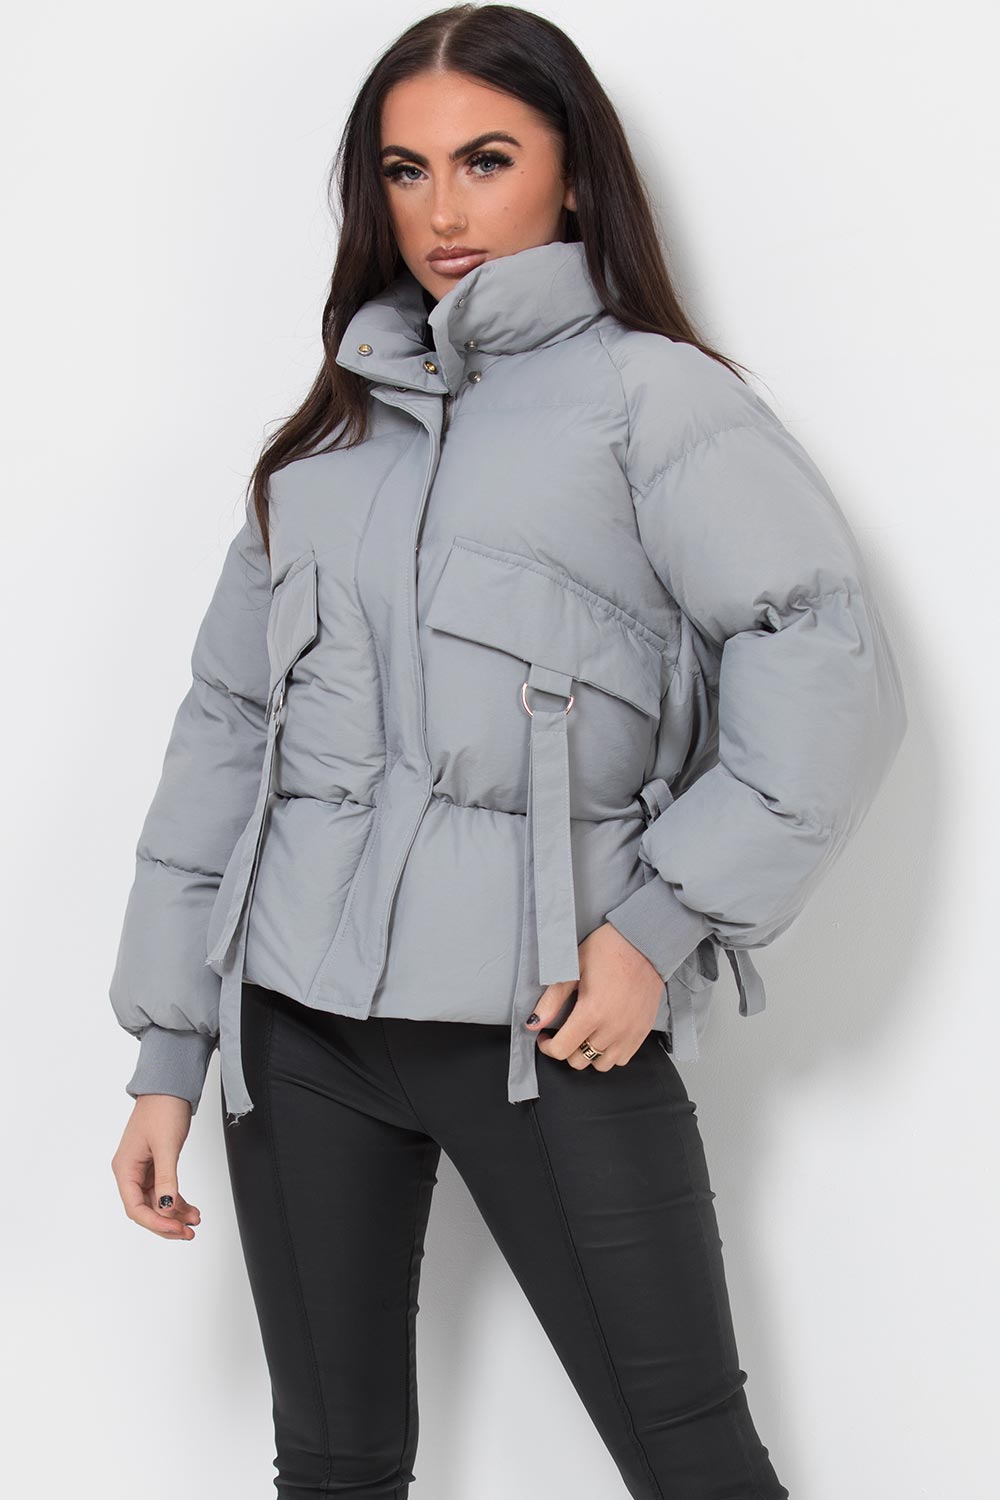 grey puffer jacket with drawstring waist